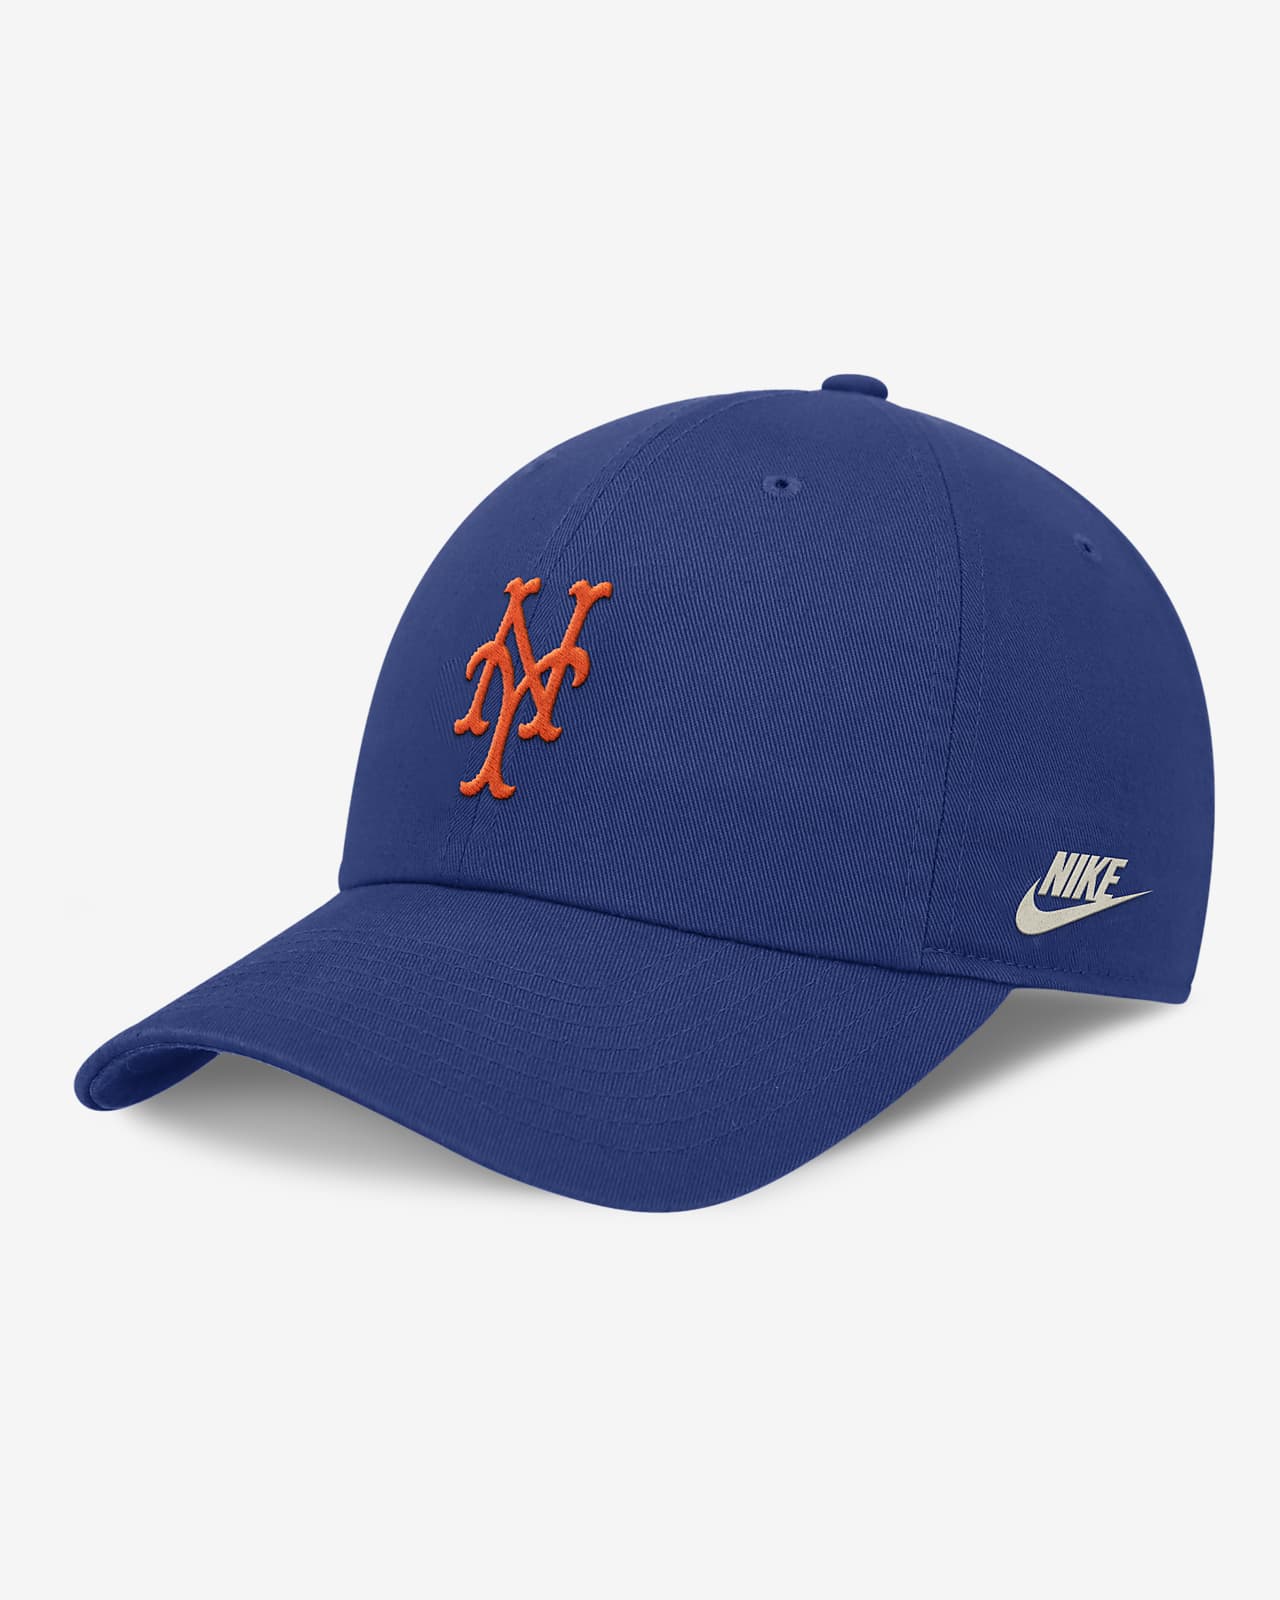 New York Mets Rewind Cooperstown Club Men's Nike MLB Adjustable Hat